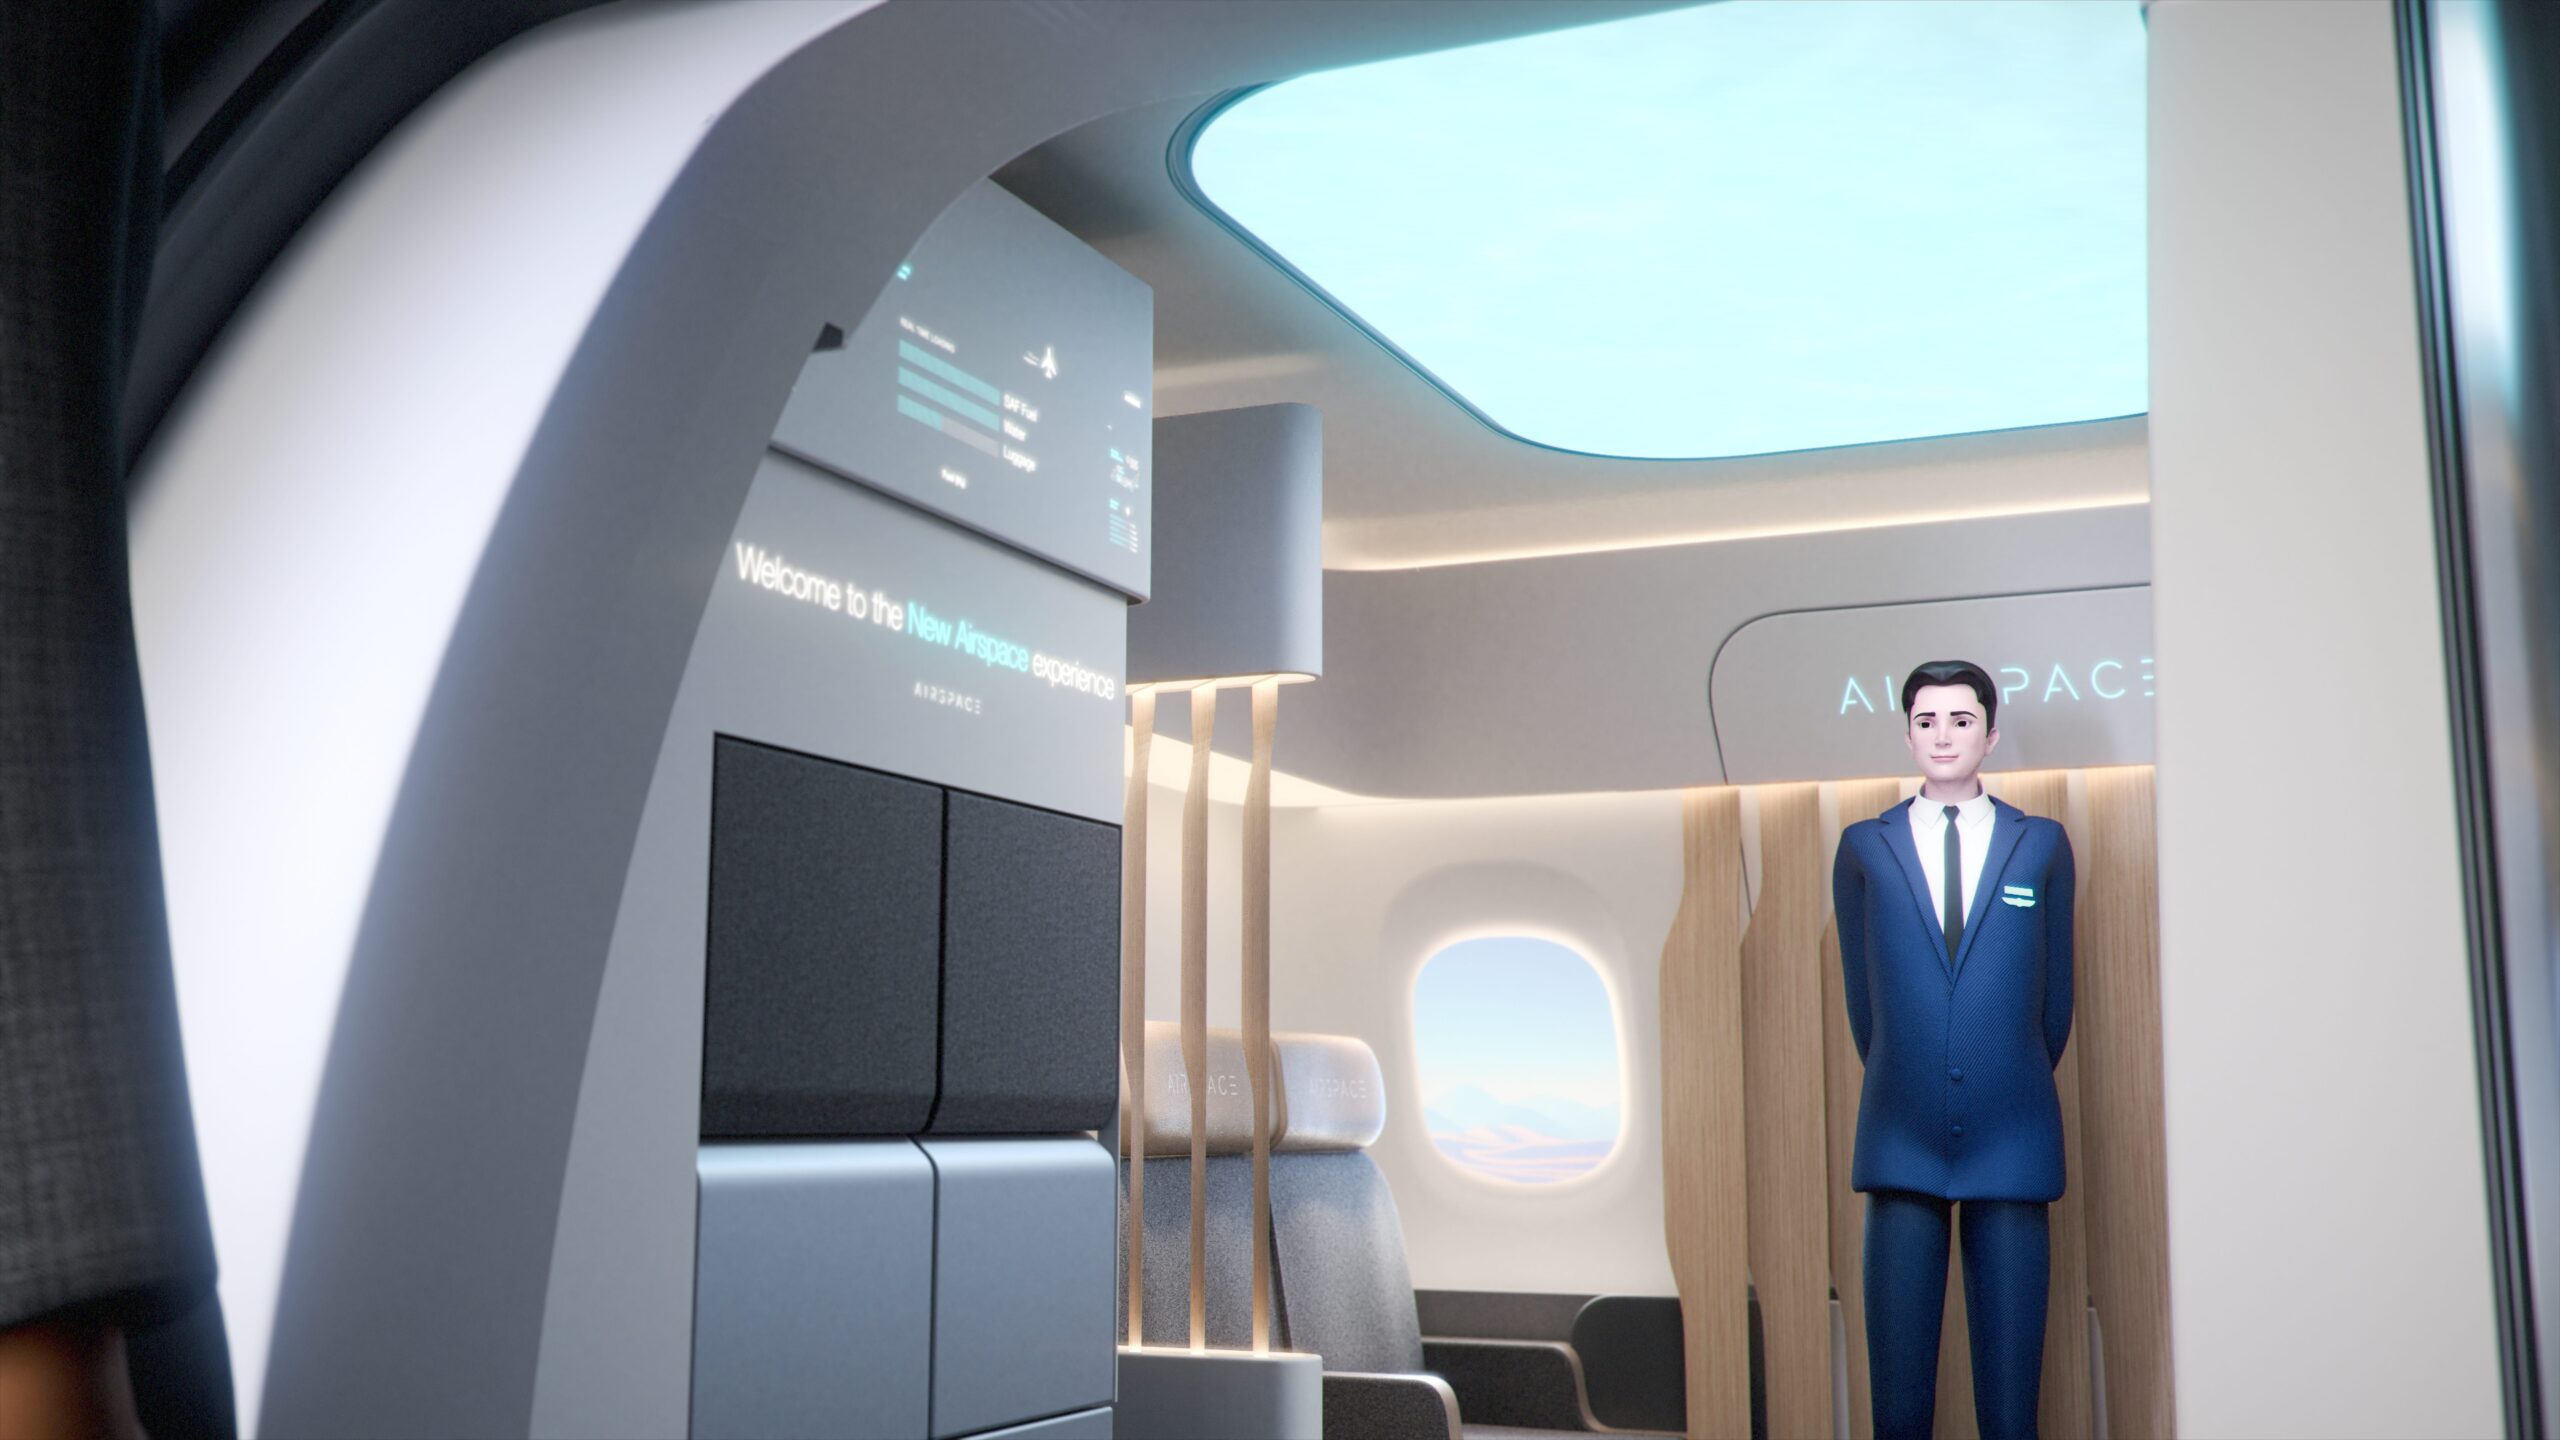 De Airspace Cabin Vision 2035+ rendering van Airbus toont een stewardess die klaarstaat om passagiers te ontvangen.